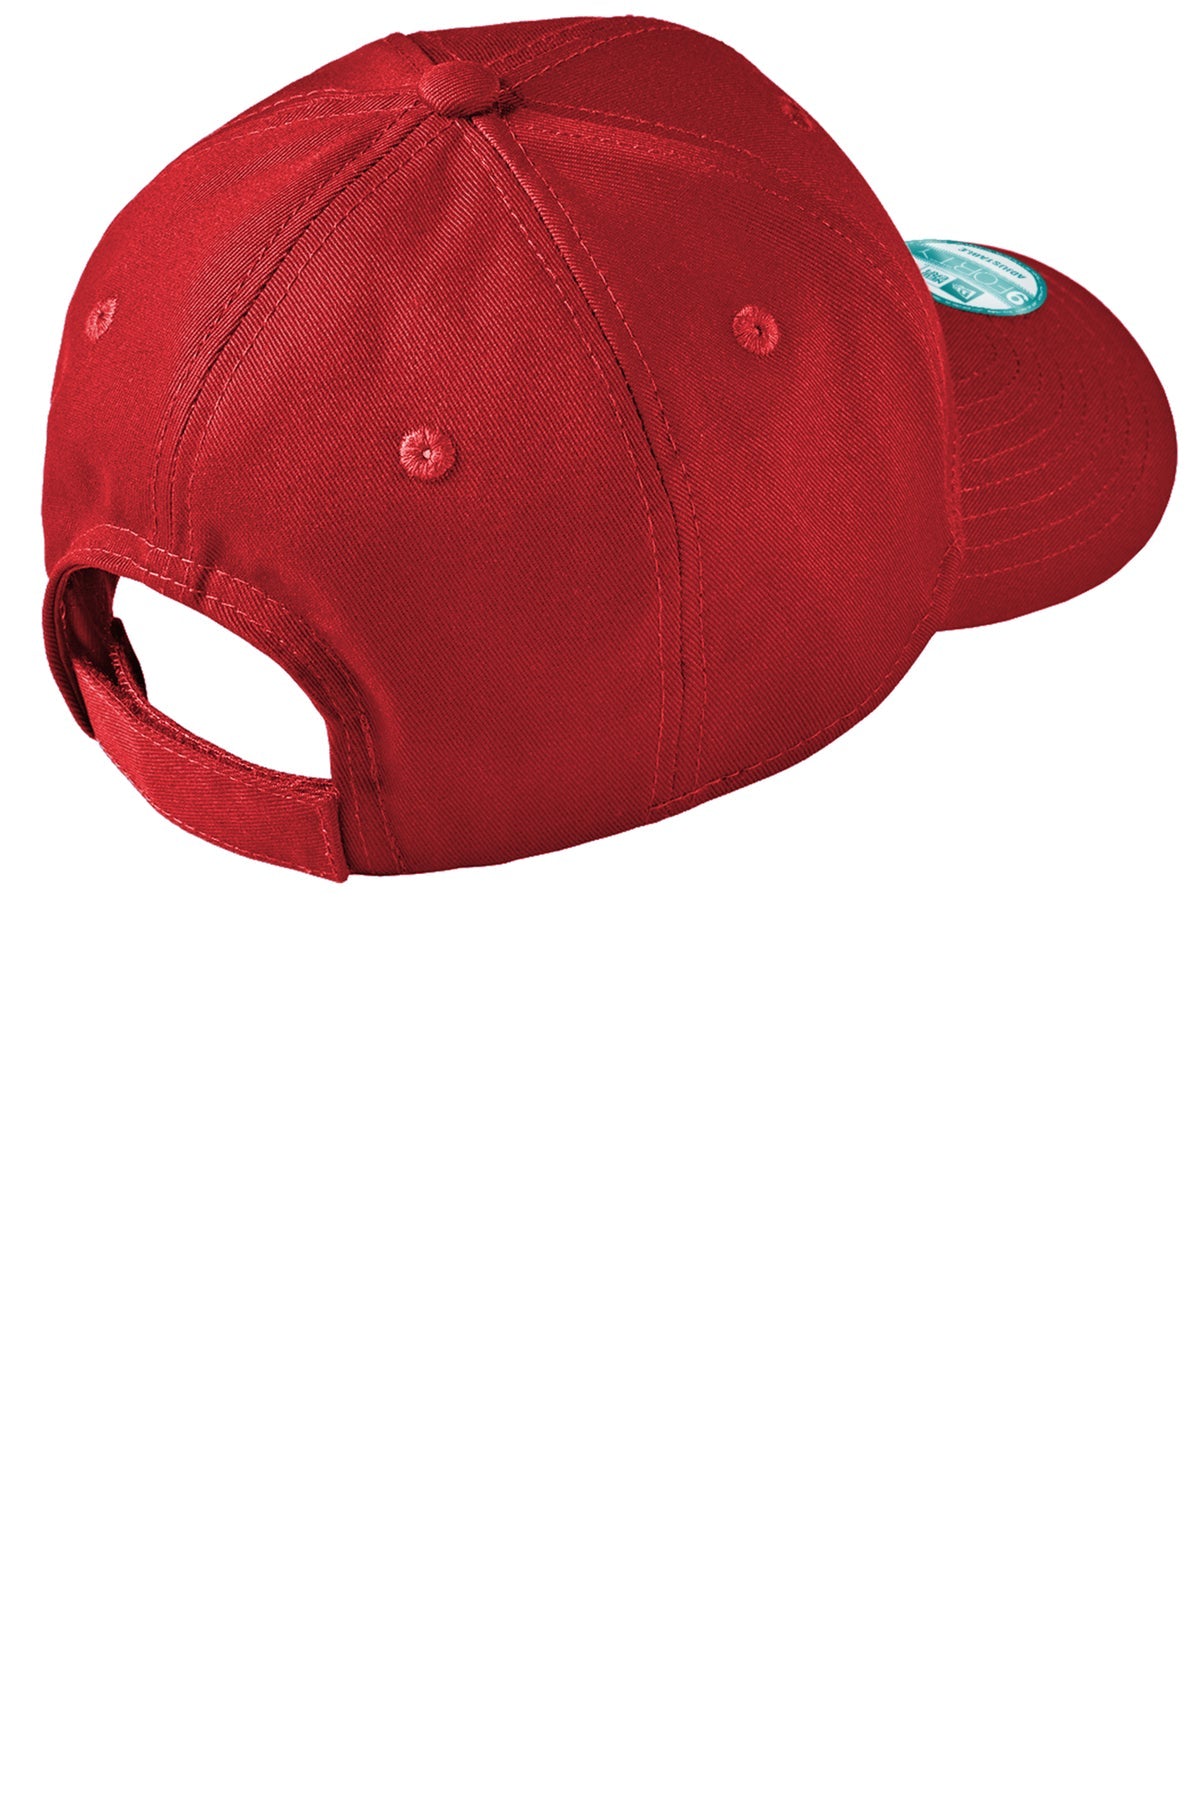 New Era Adjustable Structured Custom Caps, Scarlet Red